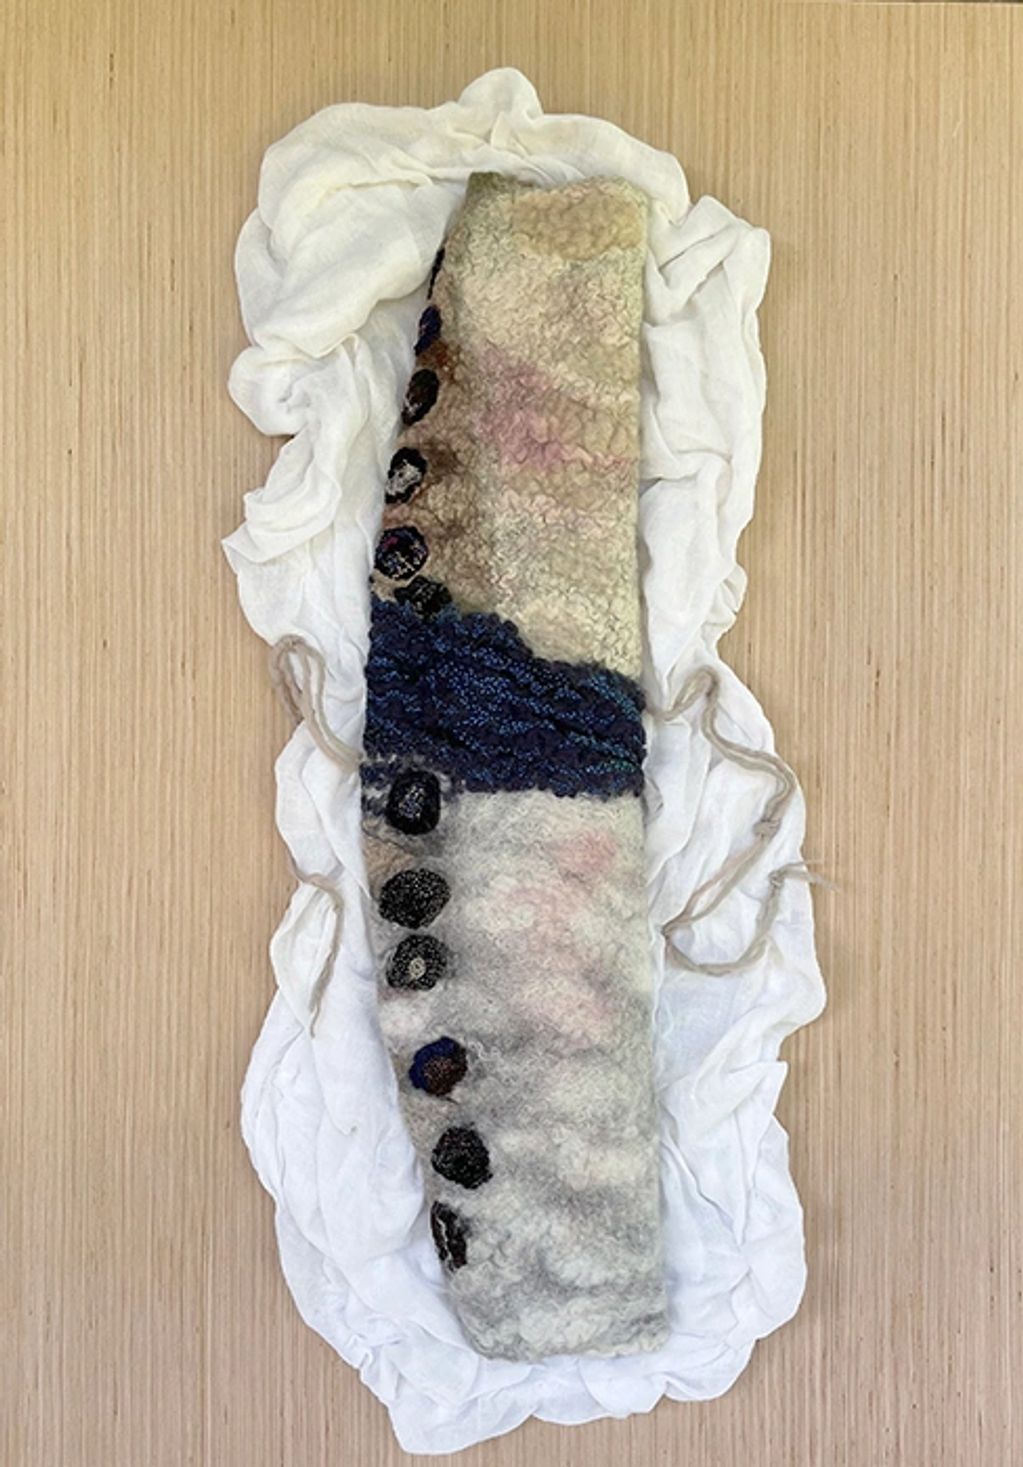 Ancestorial Memory
Kim Paxson
Unspun wool fibers massaged and rolled by hand to make wool felt, 
han